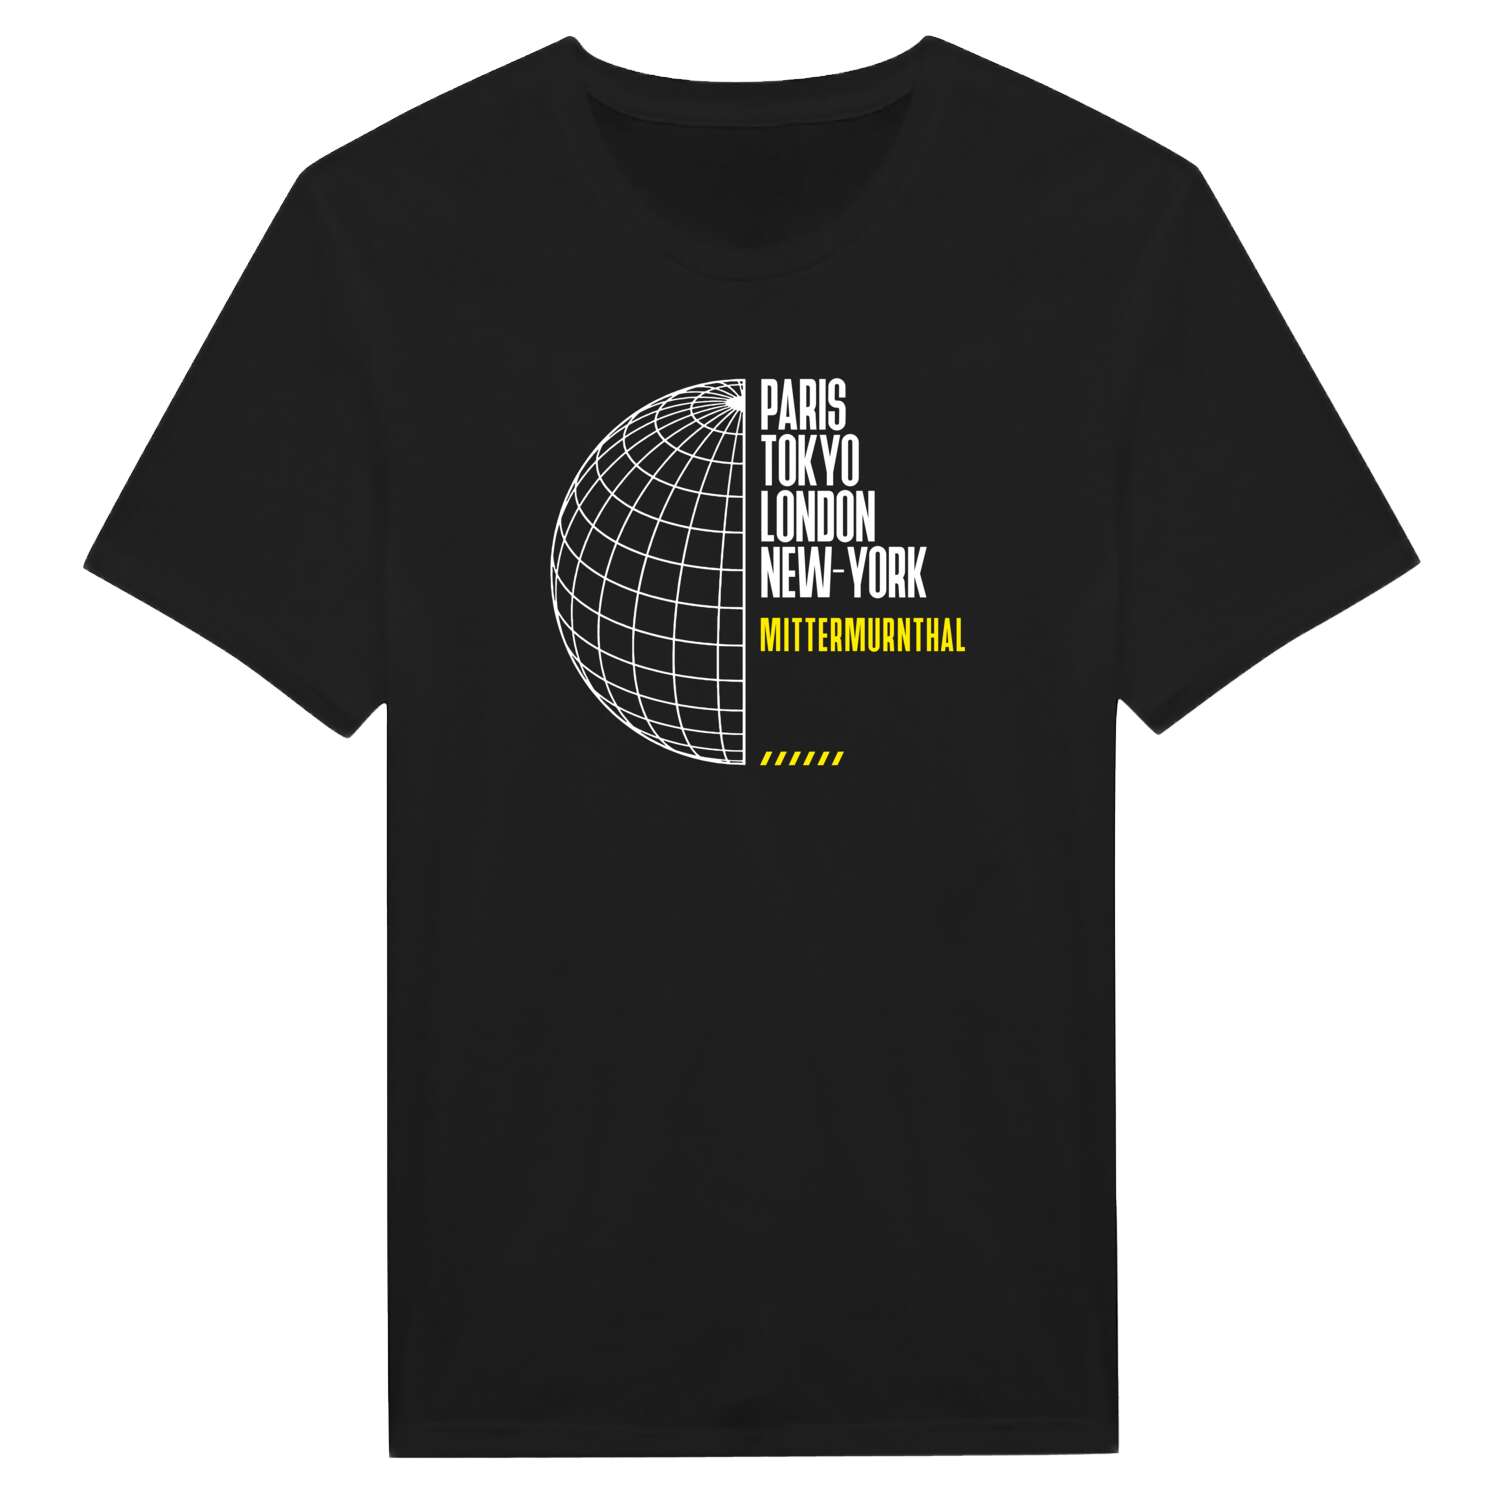 Mittermurnthal T-Shirt »Paris Tokyo London«